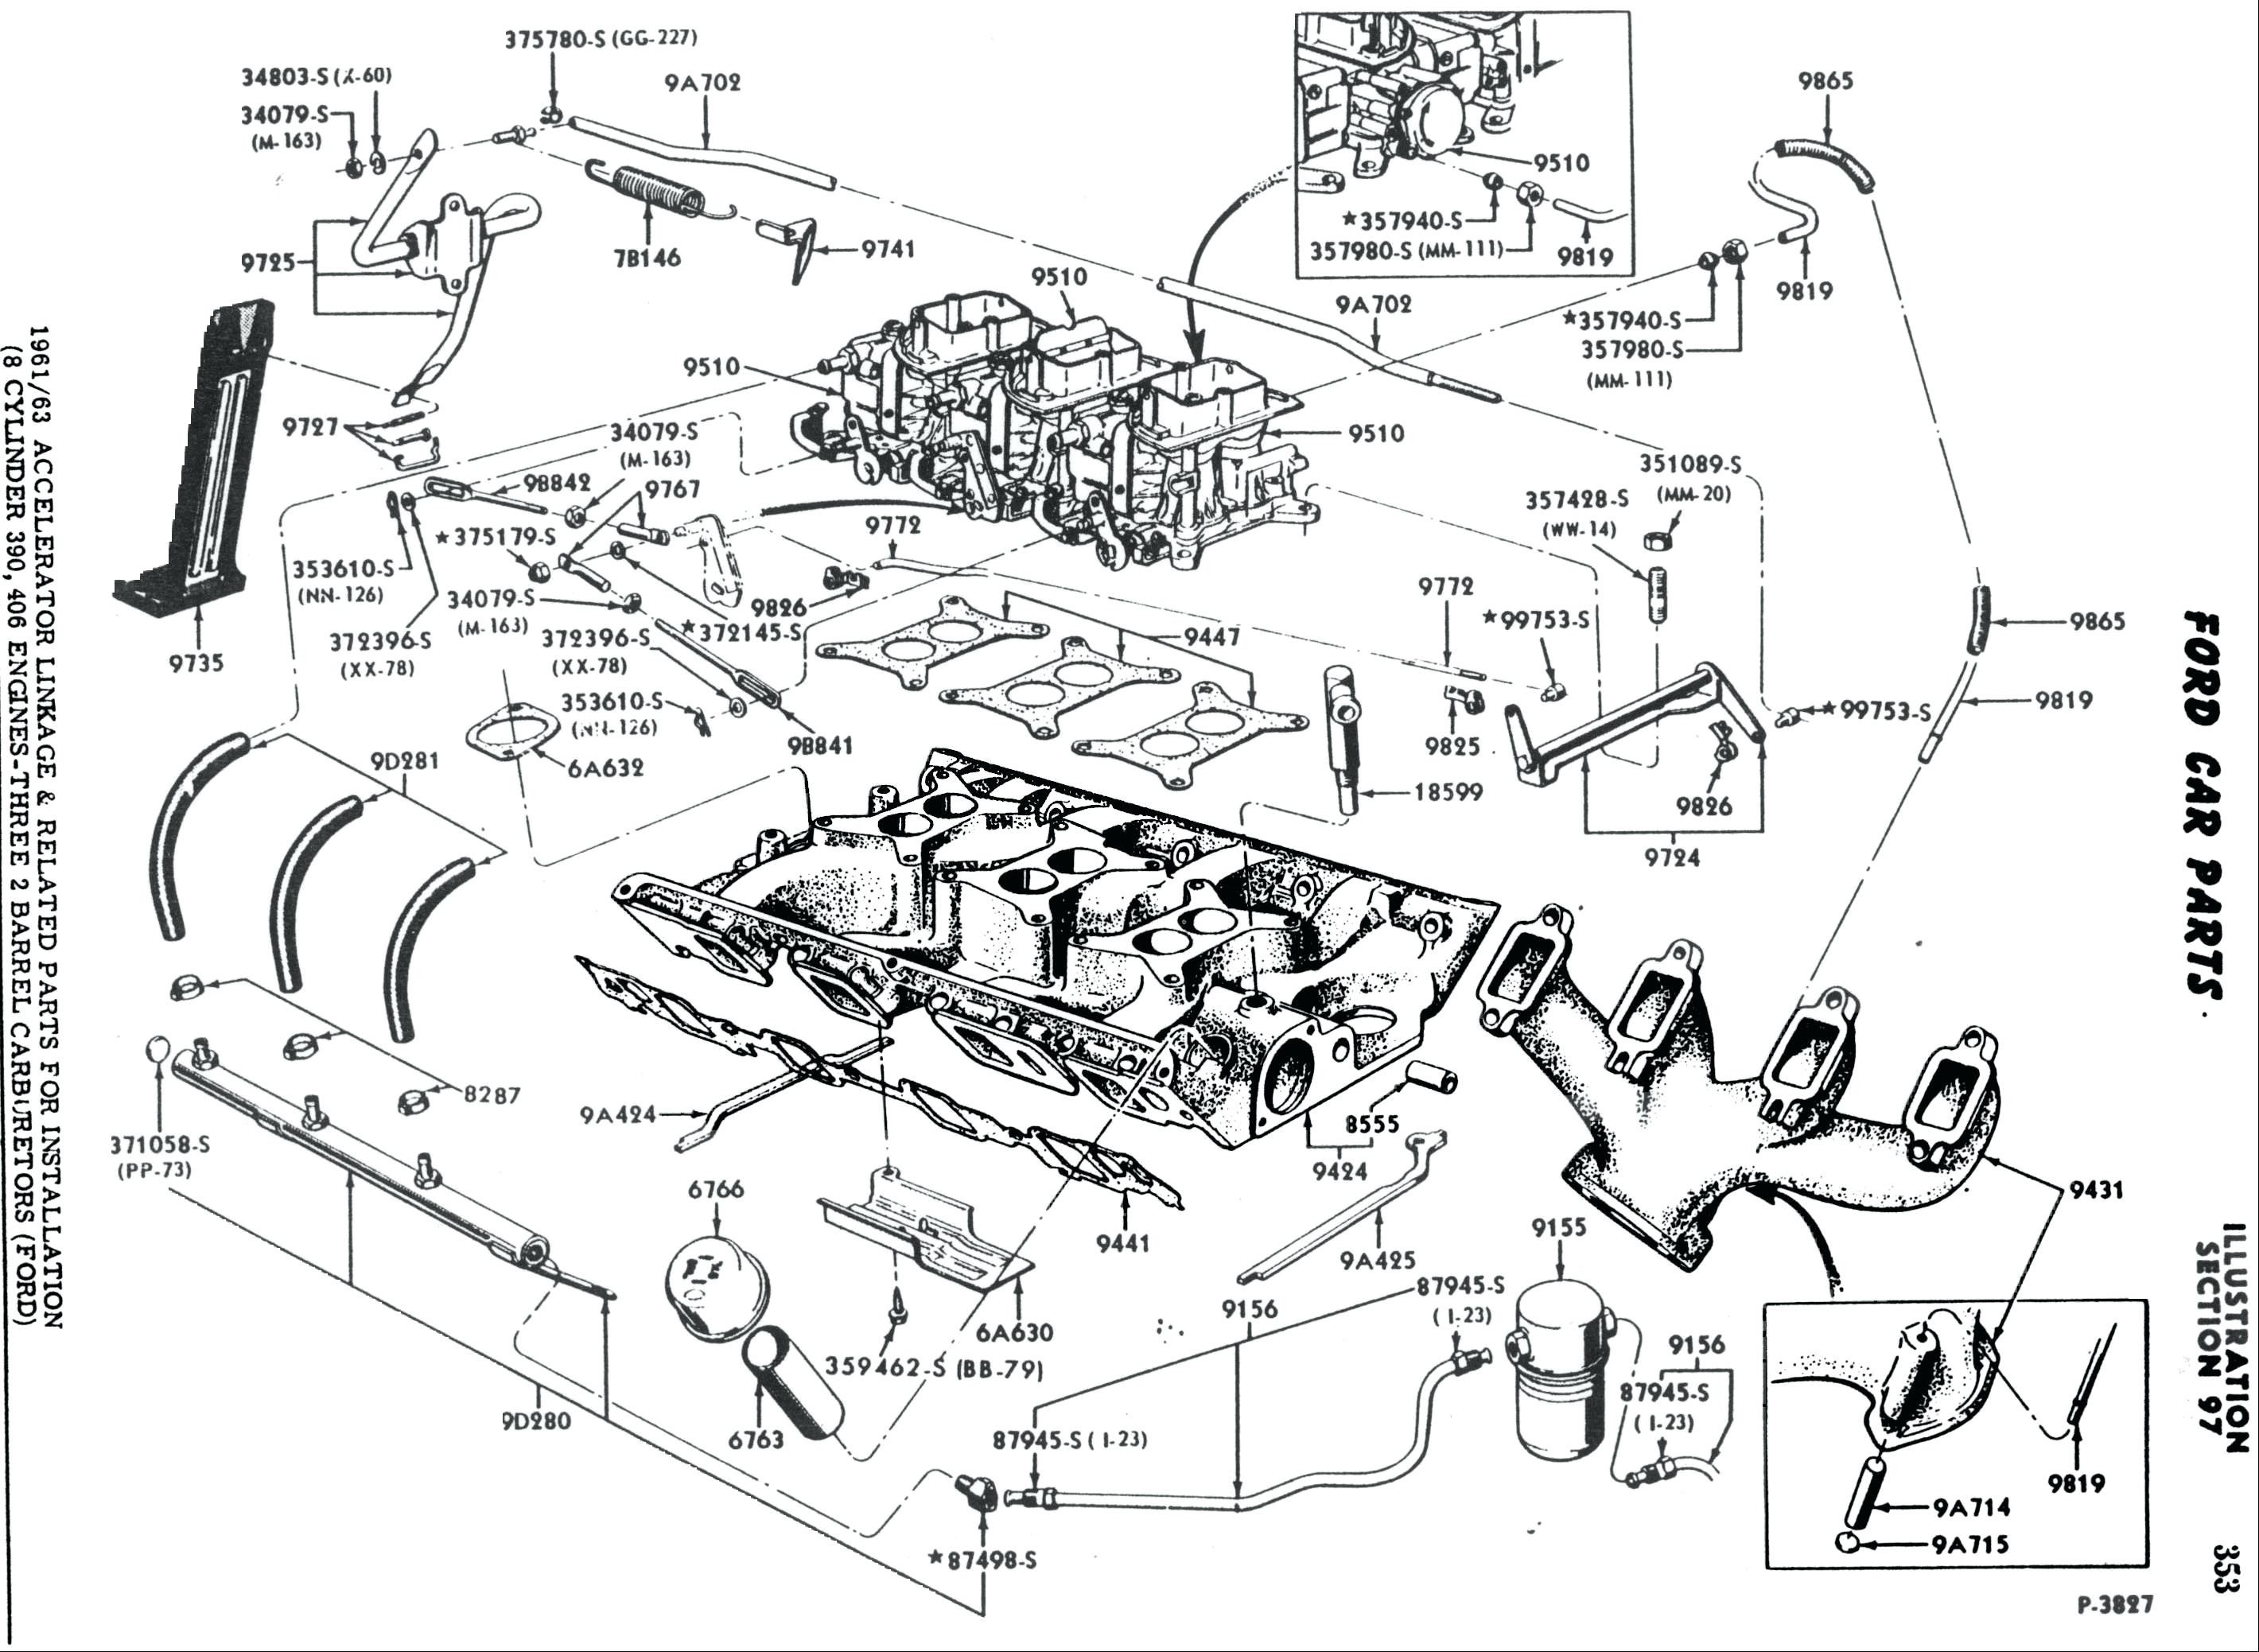 Car Engine Parts Names with Diagram Wrg 7679] Car Engine Schematics Of Car Engine Parts Names with Diagram